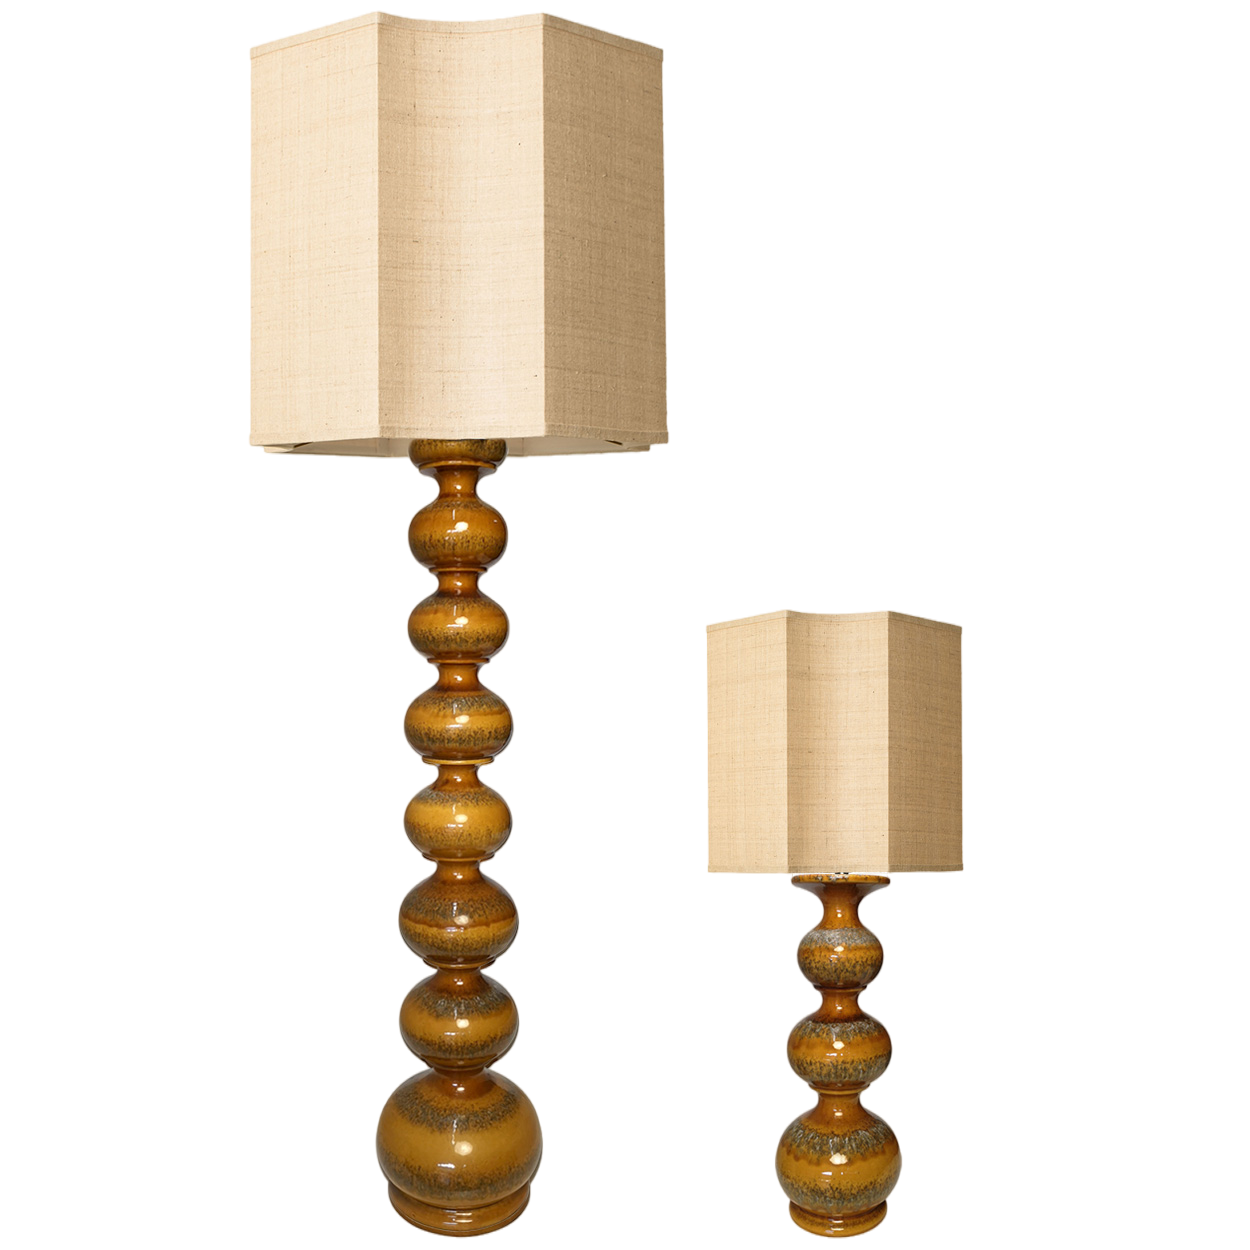 Pair of Ceramic Floor lamps with New Hexagonal Lampshade by Rene Houben, 1960s